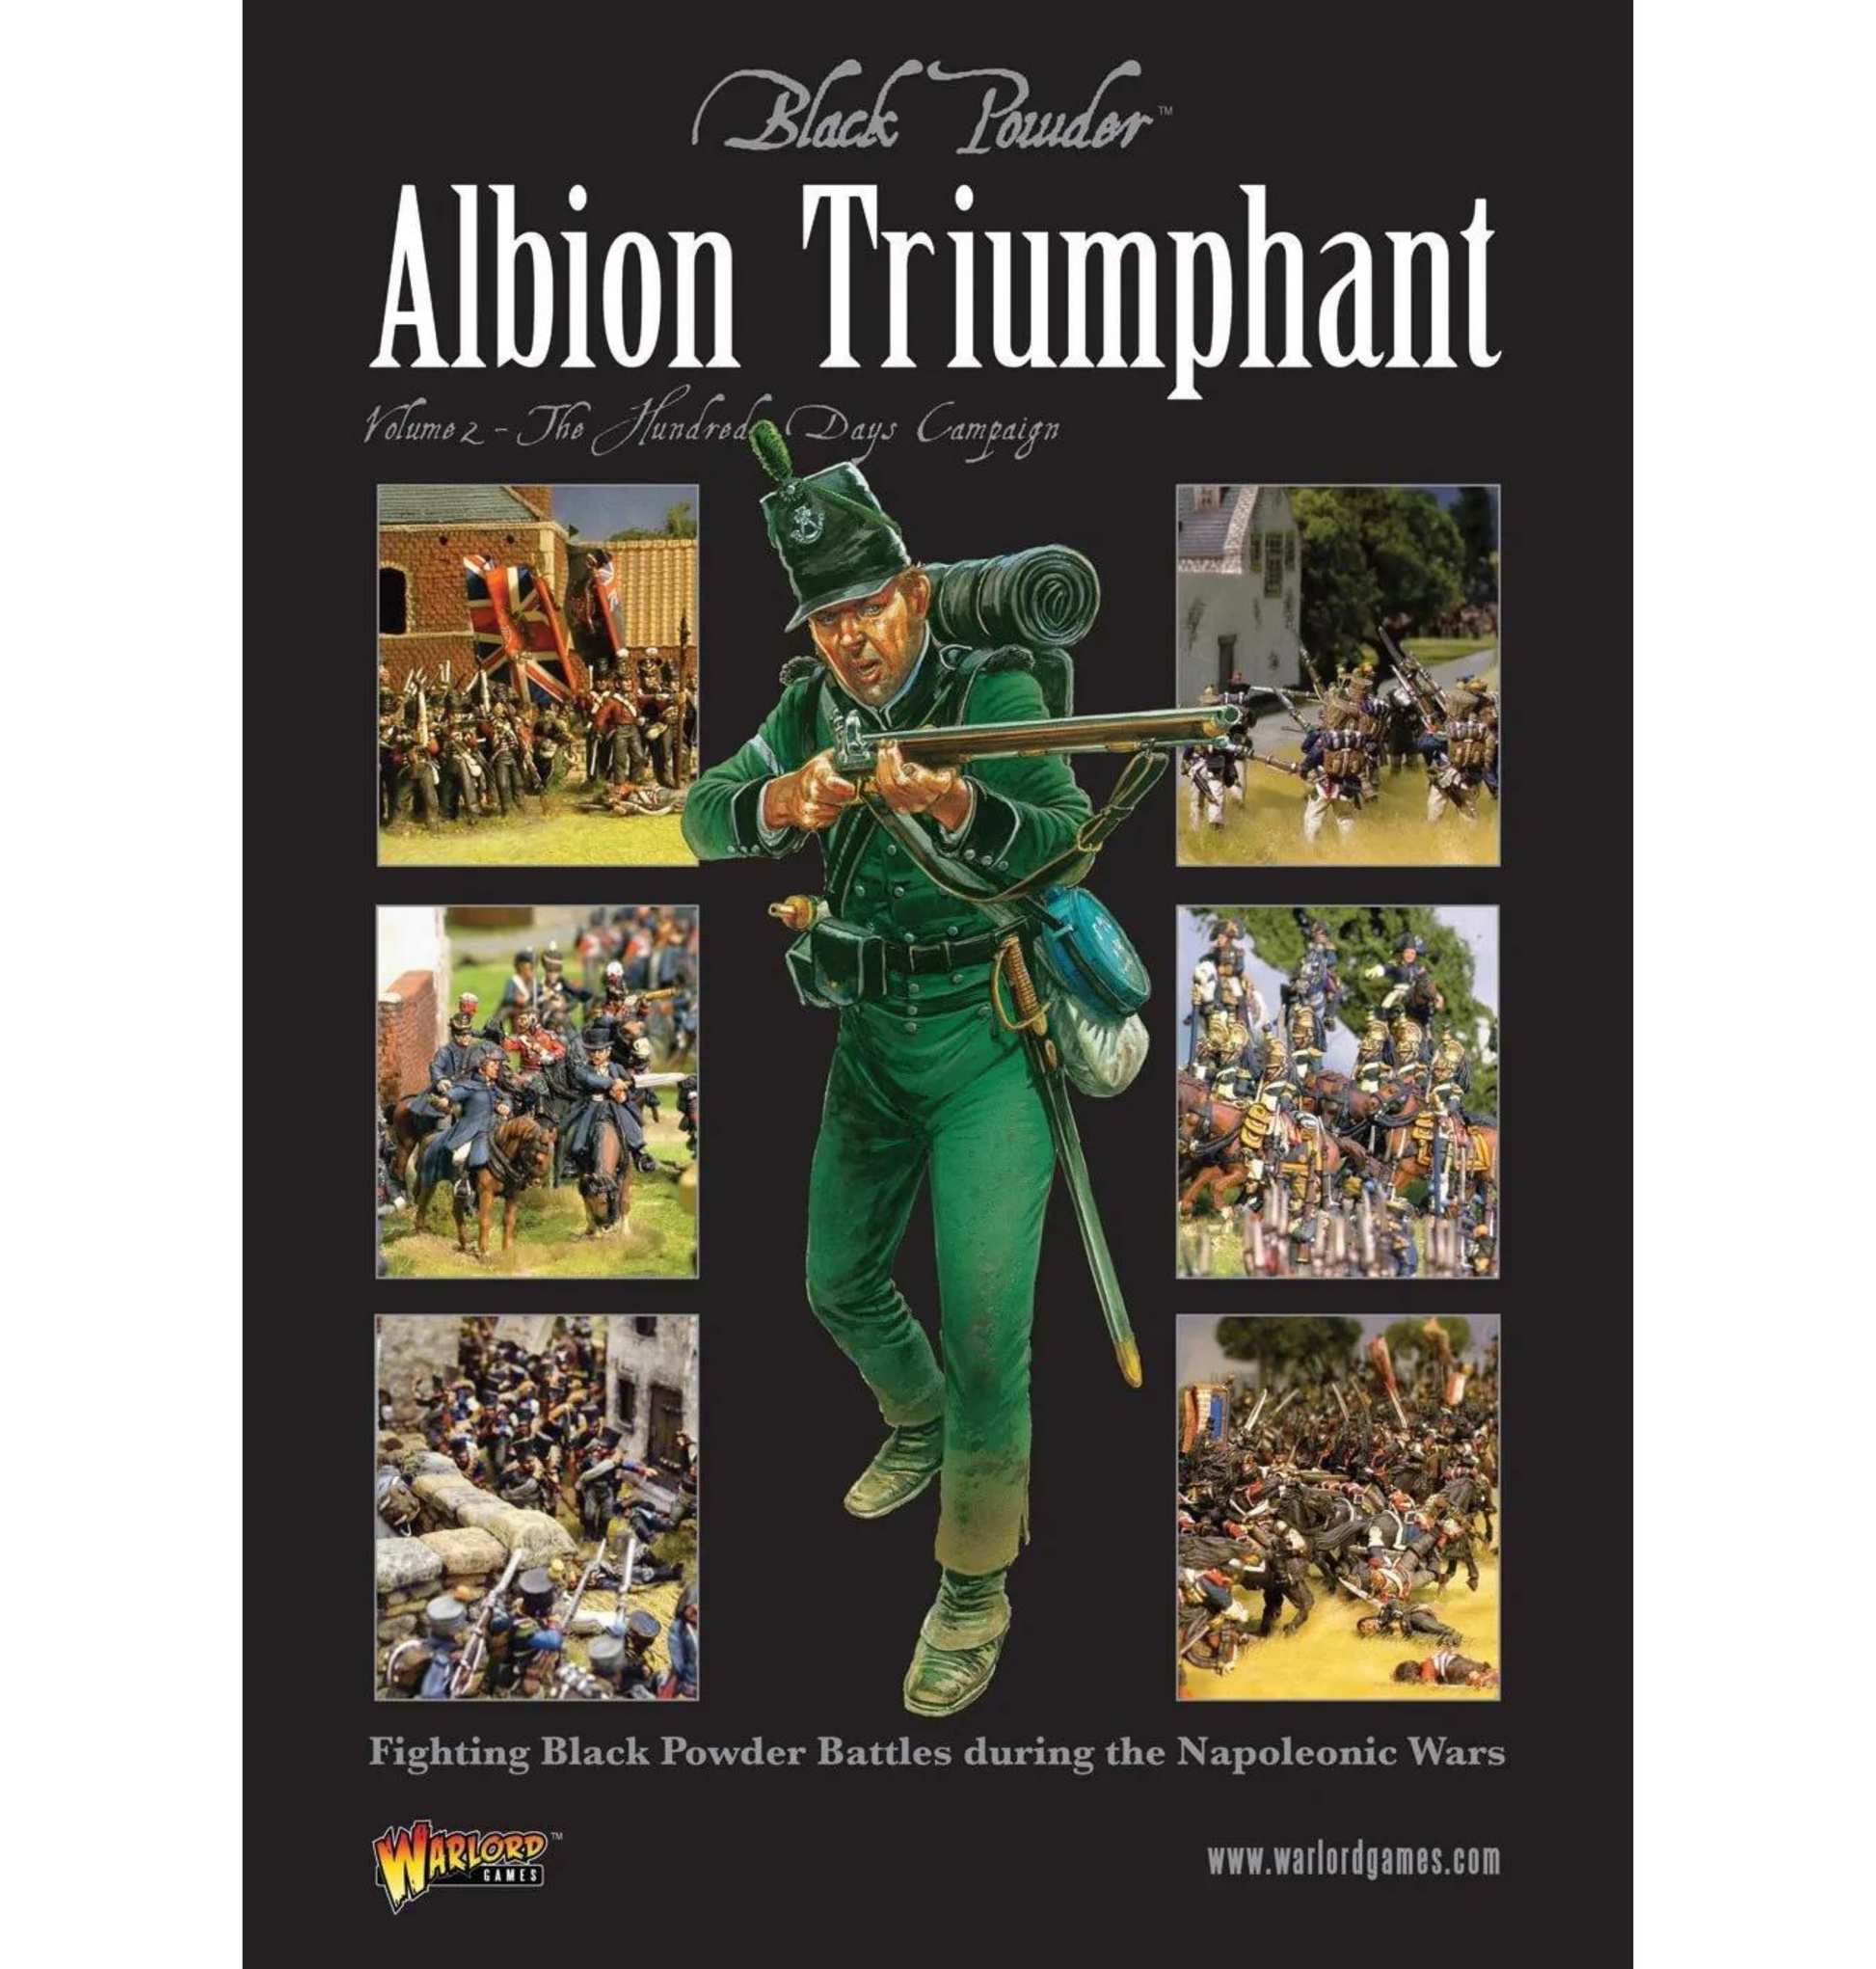 Black Powder Albion Triumphant Volume 2 - The Hundred Days Campaign